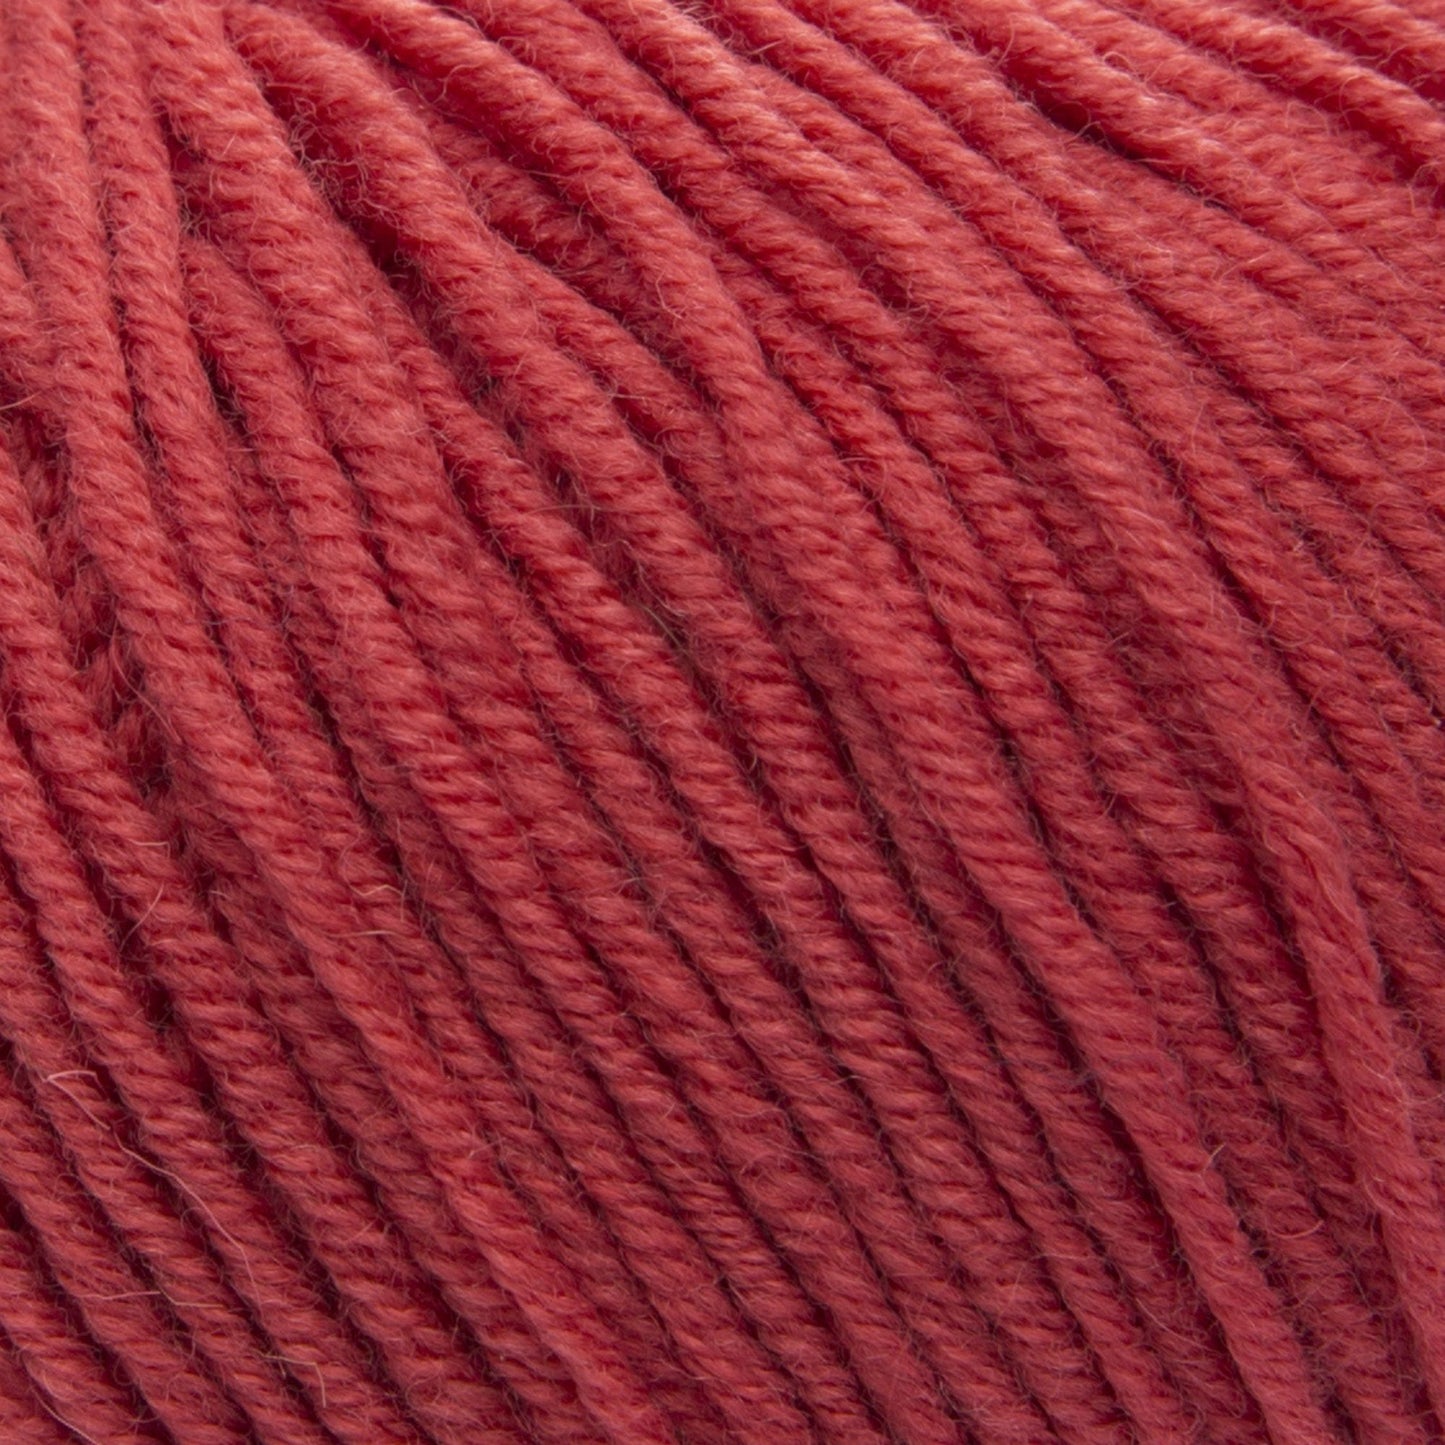 ggh Maxima | Merino wool | 110m/50g | 059 - Coral red